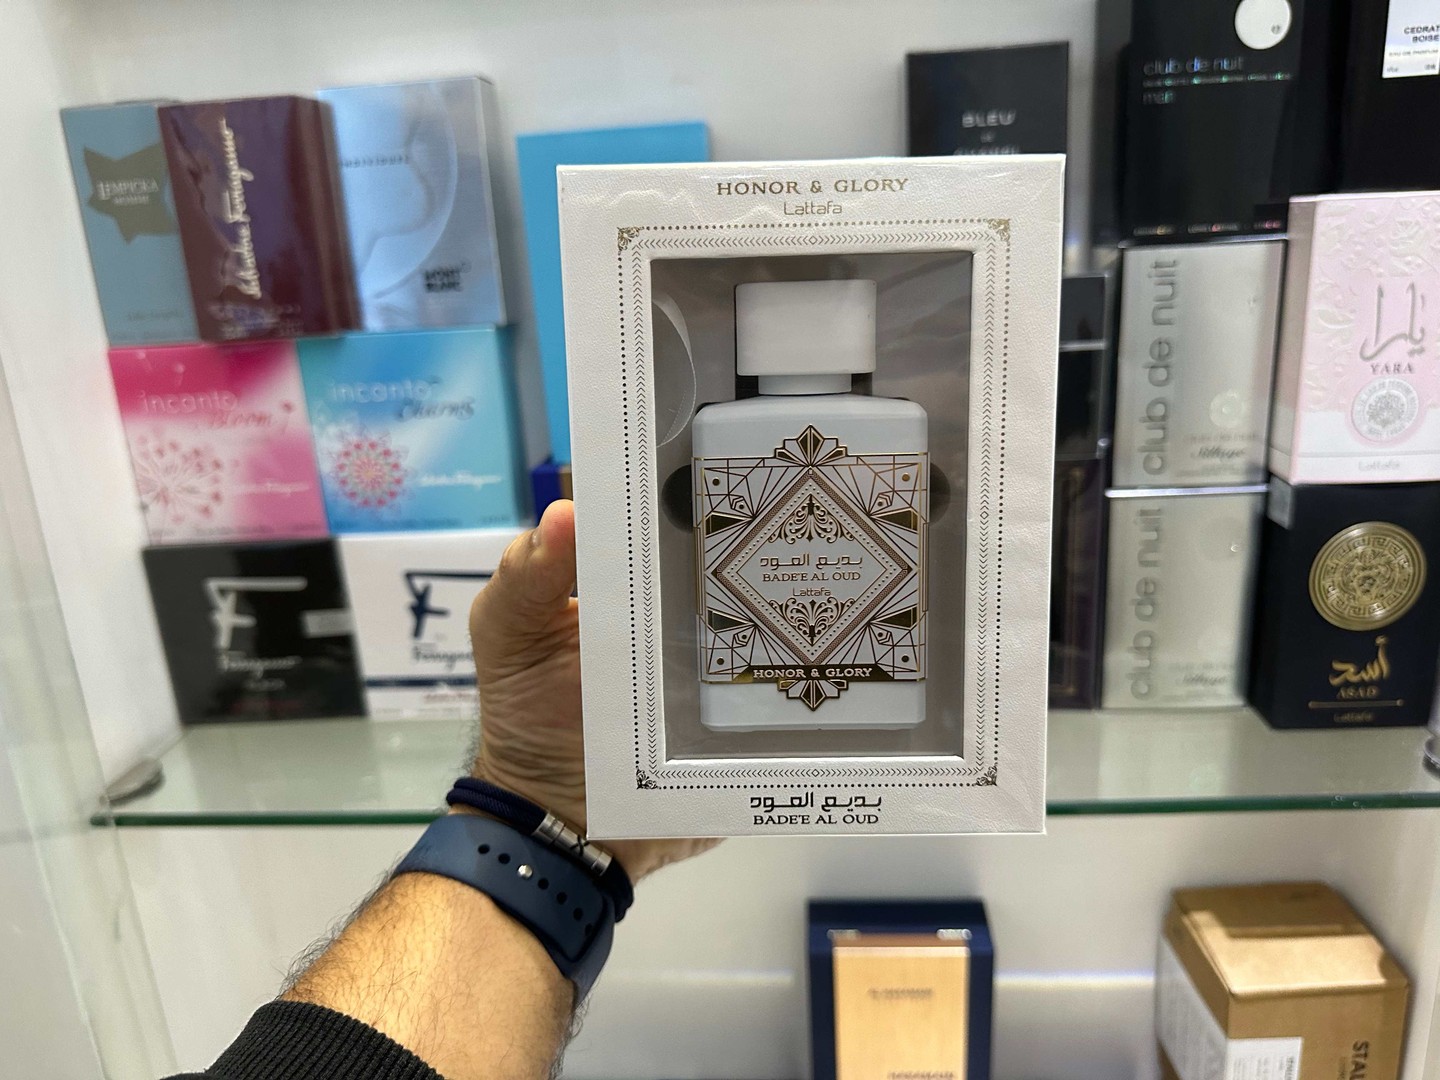 joyas, relojes y accesorios - Perfume Lattafa Honor of Glory BADEE AL OUD - Nuevo, Original , RD$ 4,250 NEG